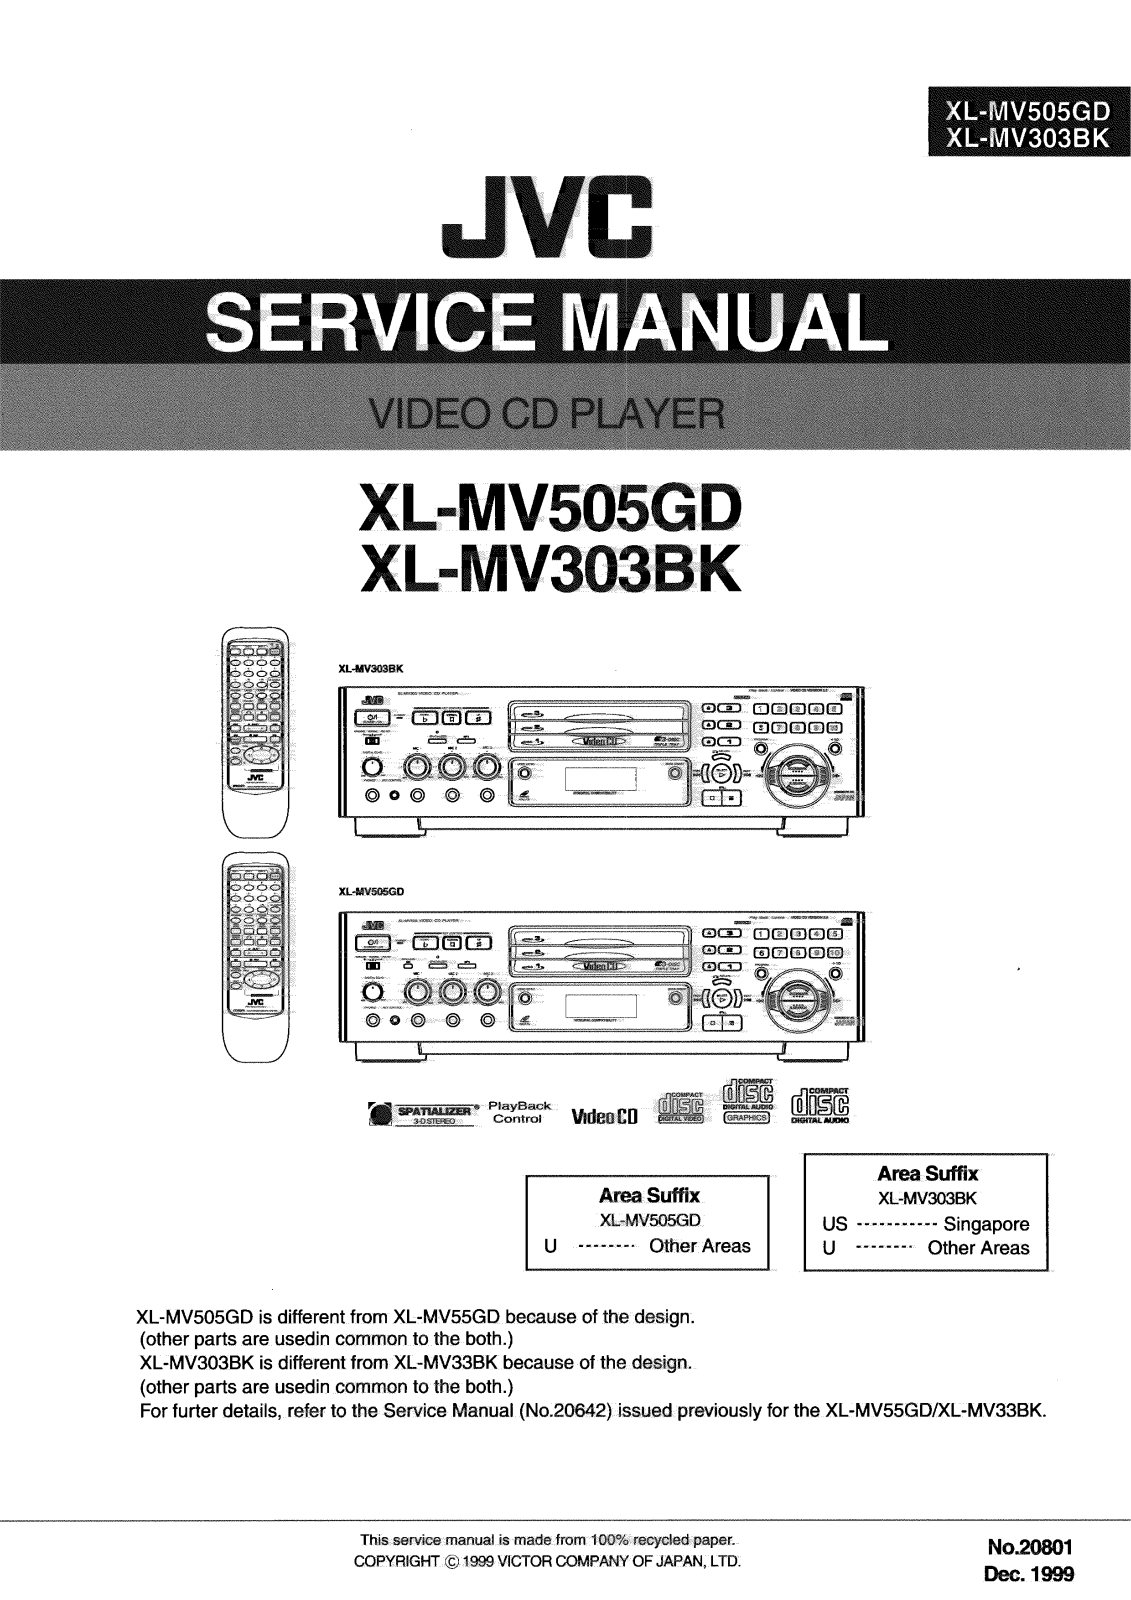 JVC XL-MV303BKU, XL-MV303BKUS, XL-MV505GDU Service Manual